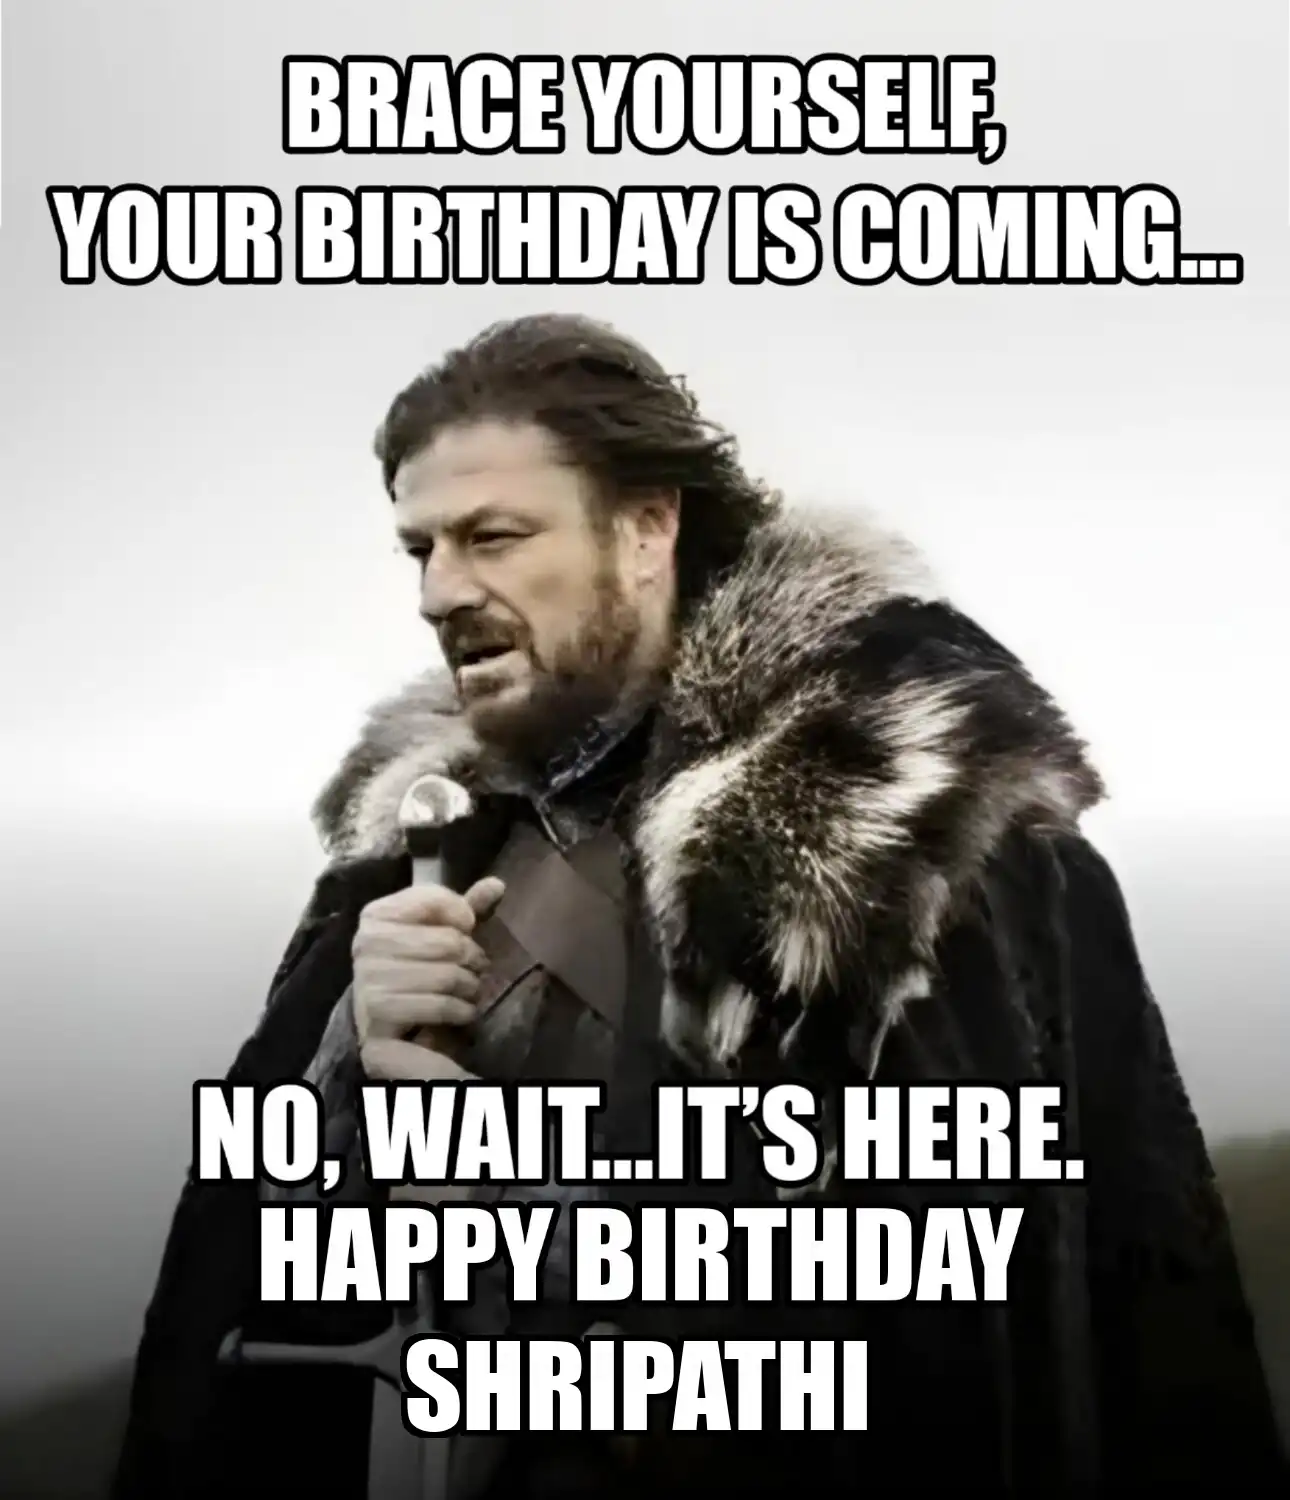 Happy Birthday Shripathi Brace Yourself Your Birthday Is Coming Meme